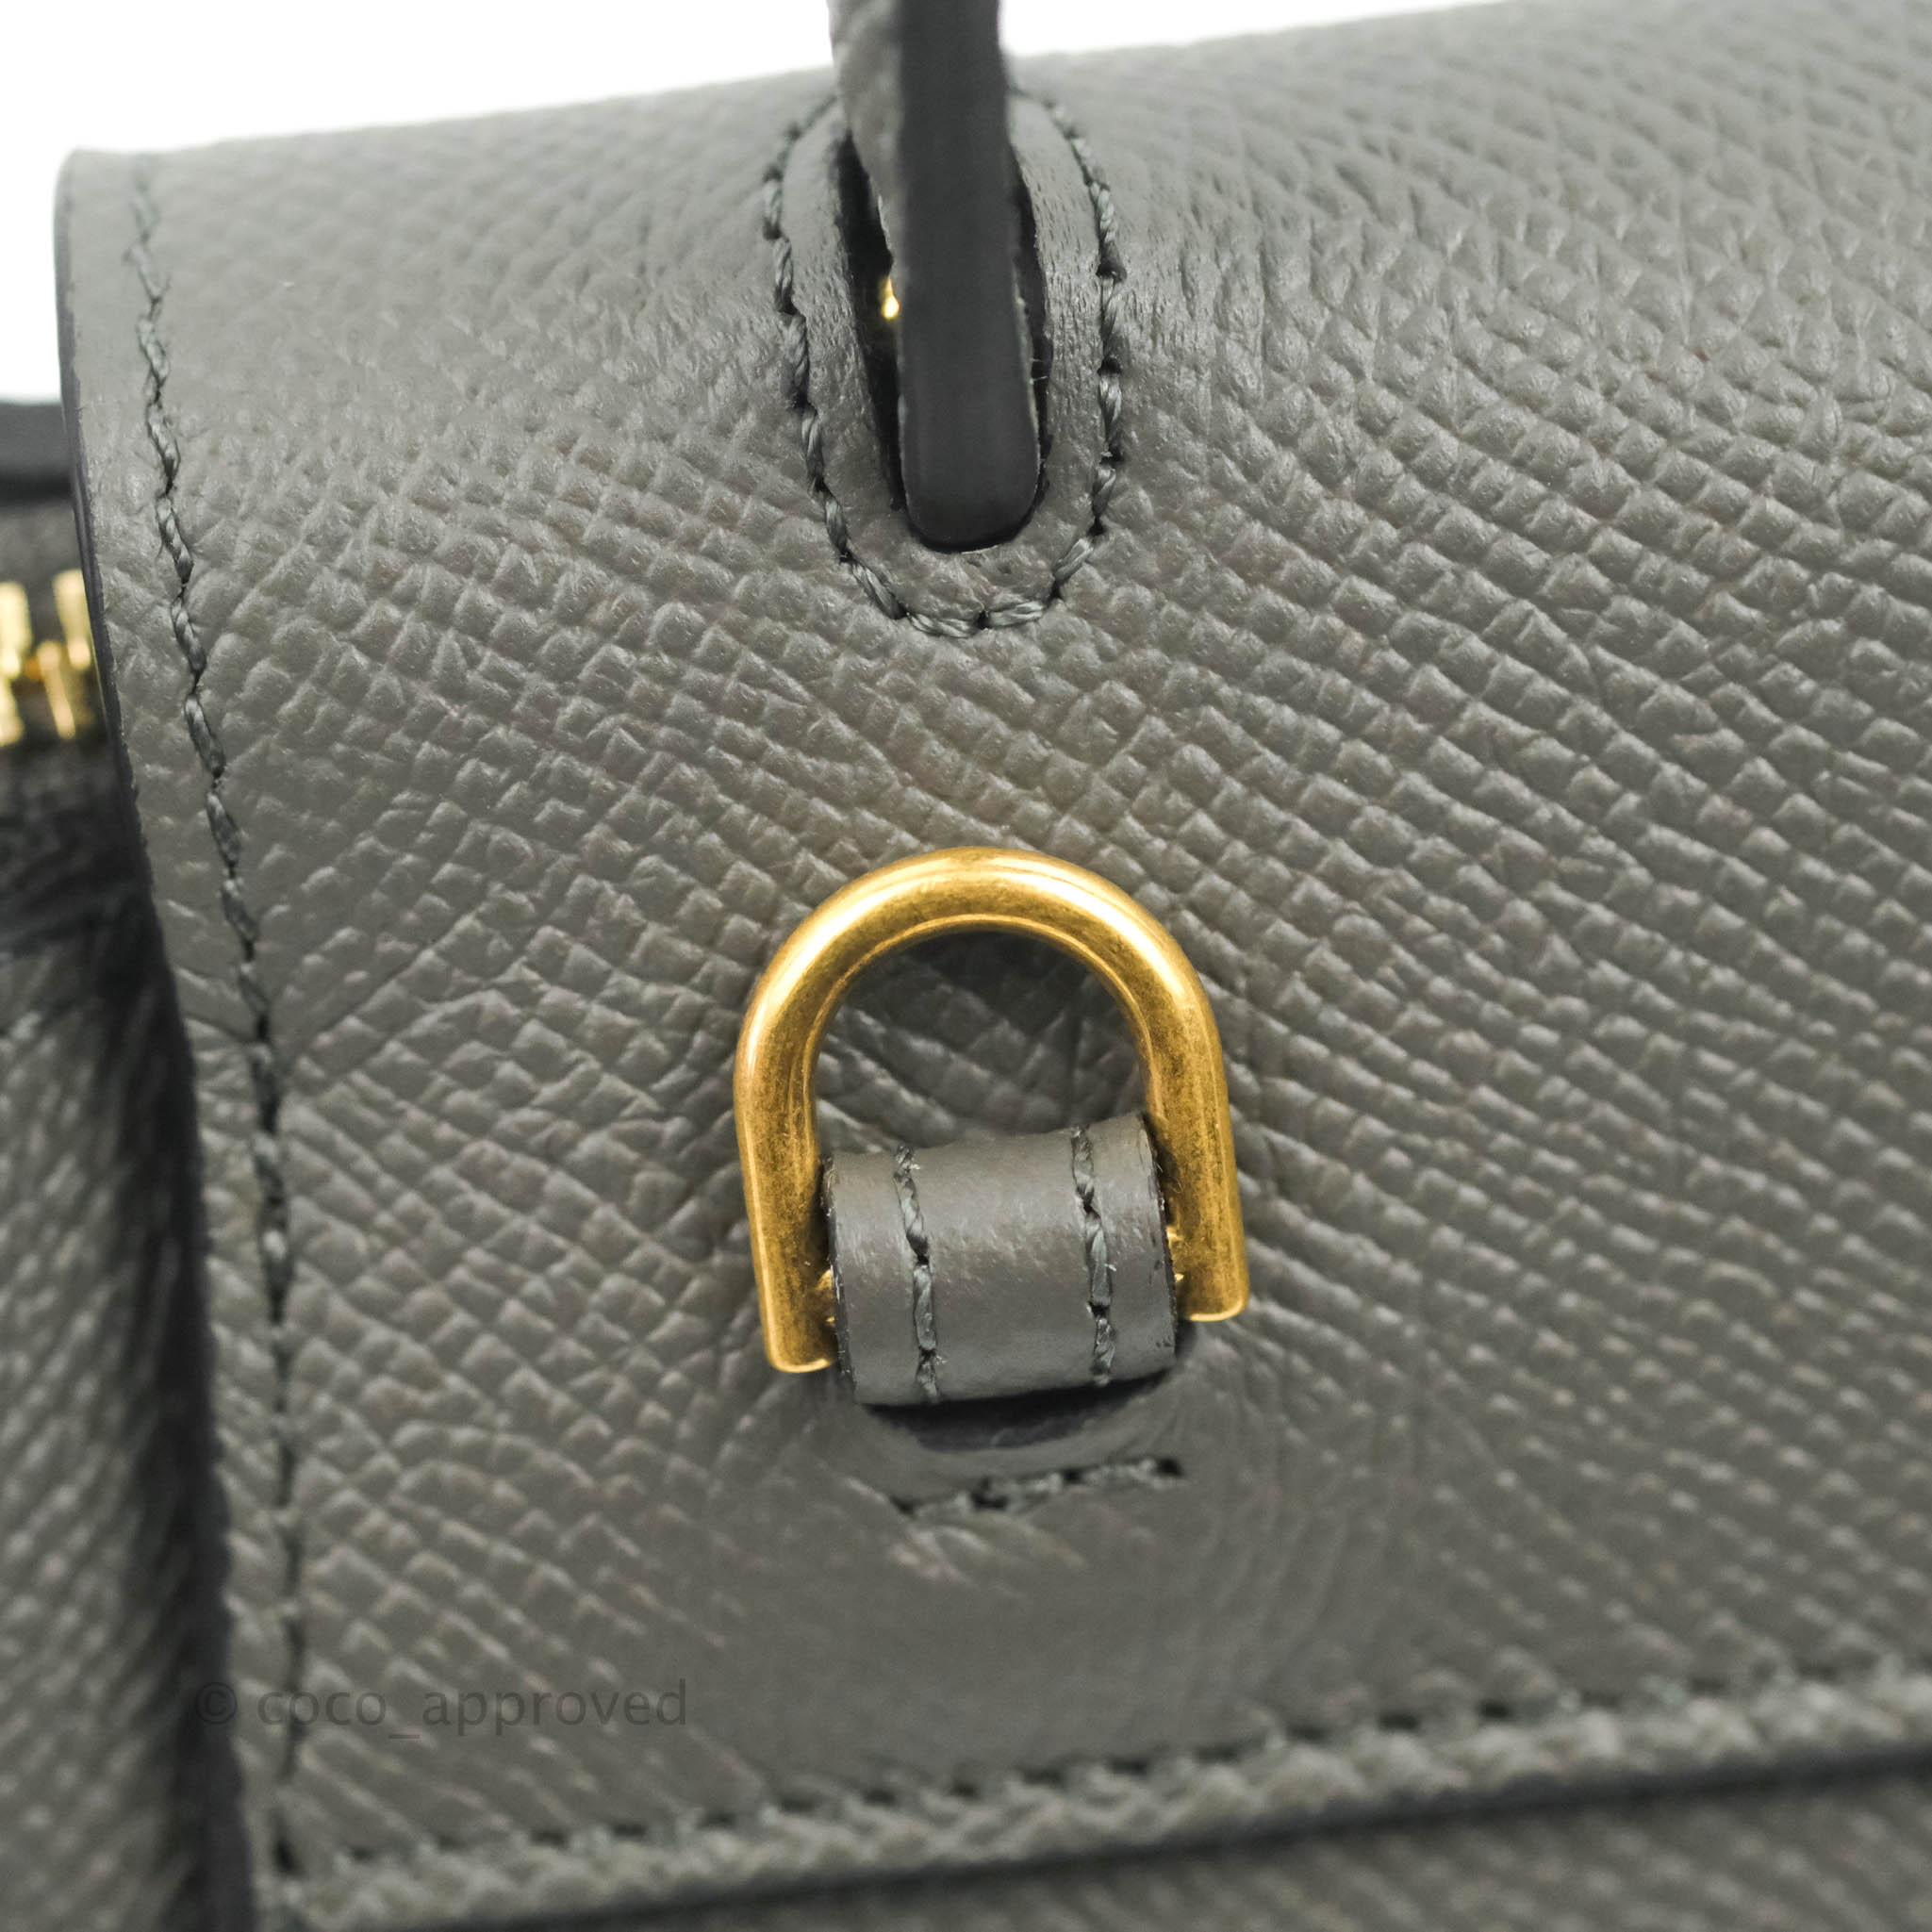 New pico belt bag : r/handbags